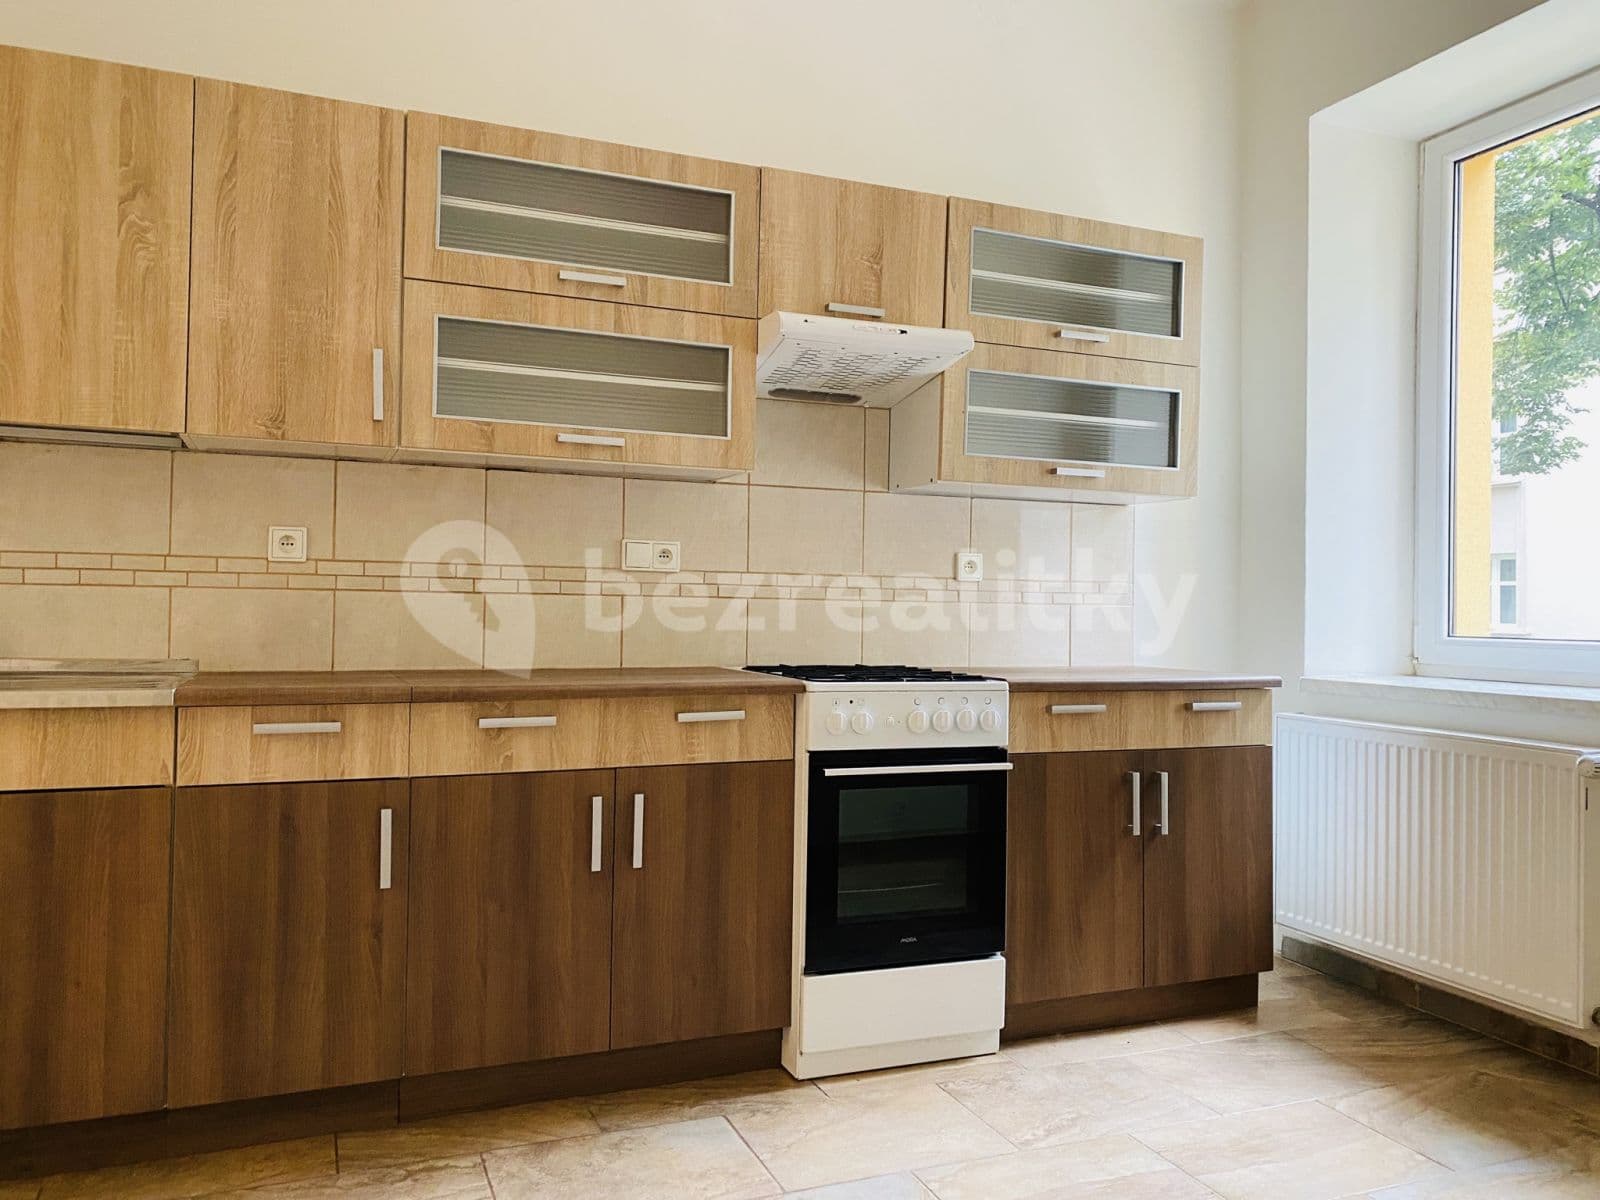 1 bedroom flat to rent, 37 m², Jahnova, Ostrava, Moravskoslezský Region